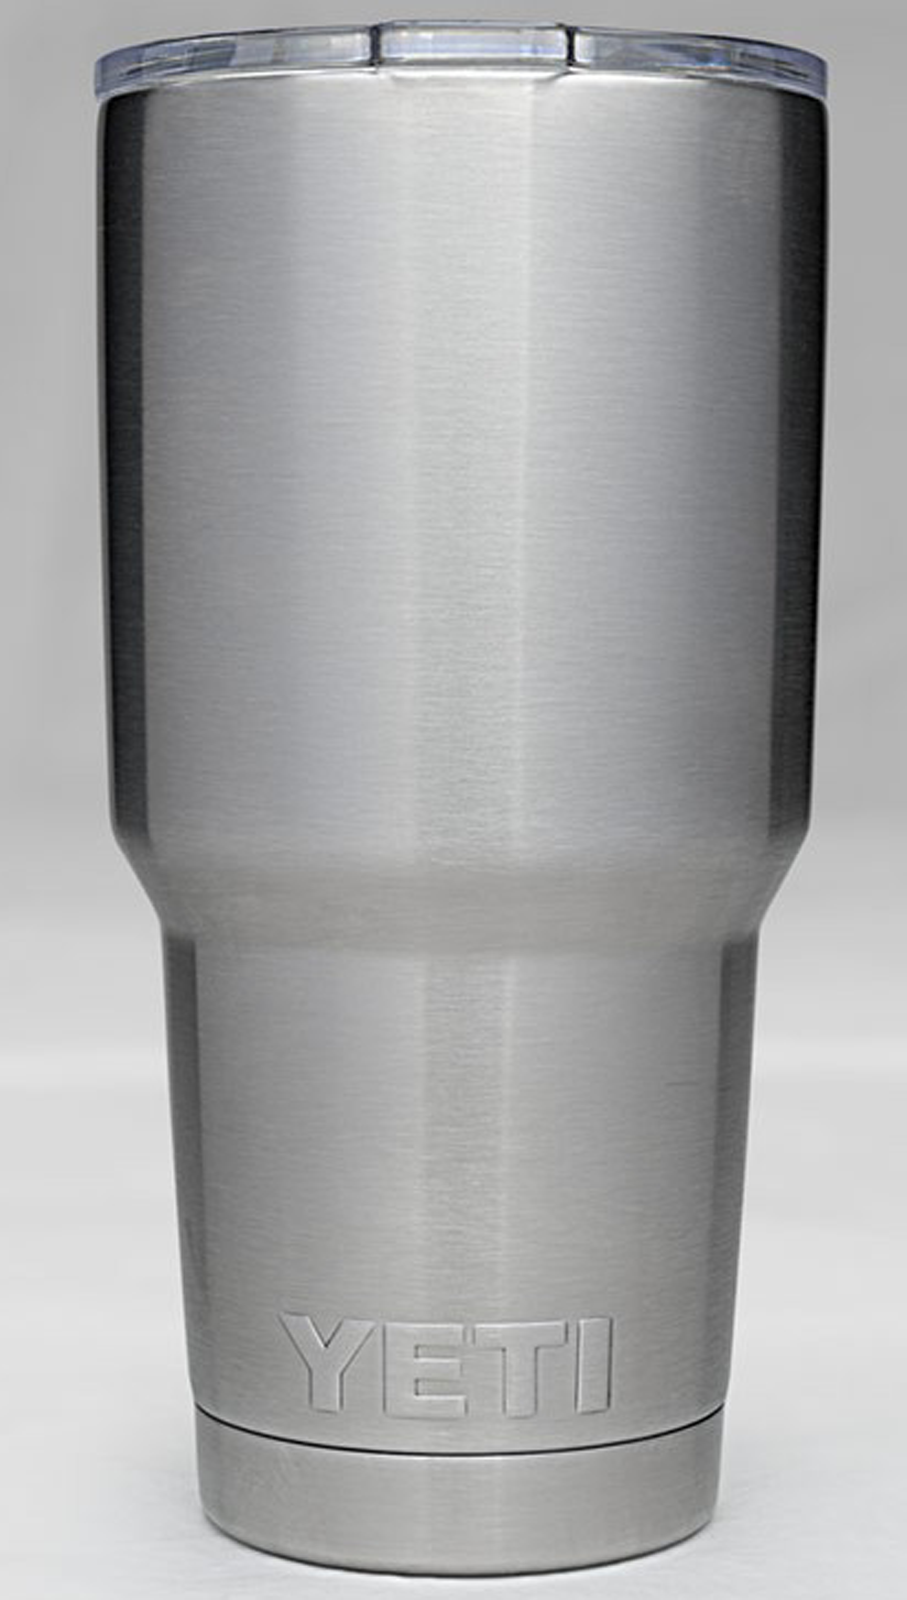 Yeti Rambler 20 Oz. Silver Stainless Steel Insulated Tumbler